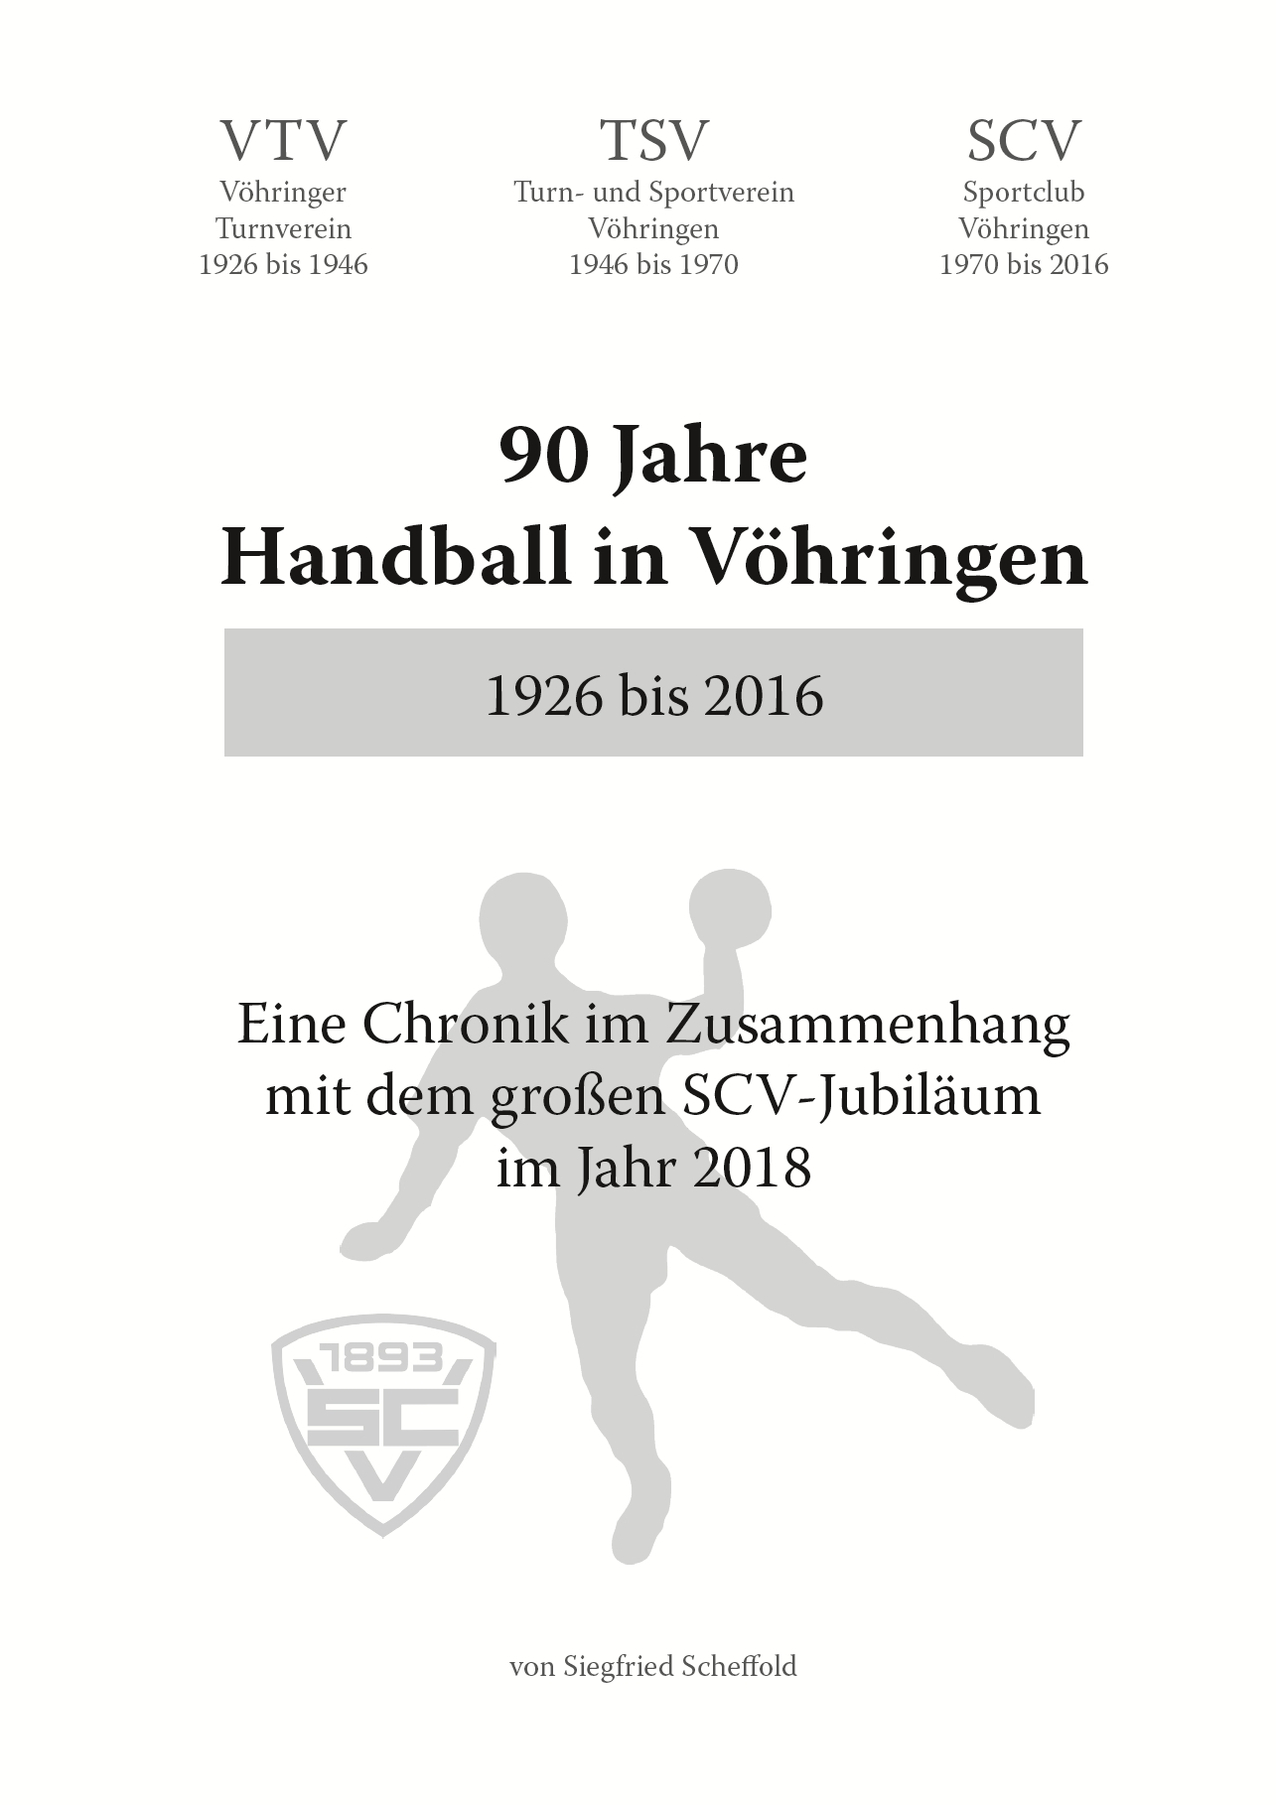 Titelblatt der Chronik zum 125-jährigen Bestehen des SC Vöhringen